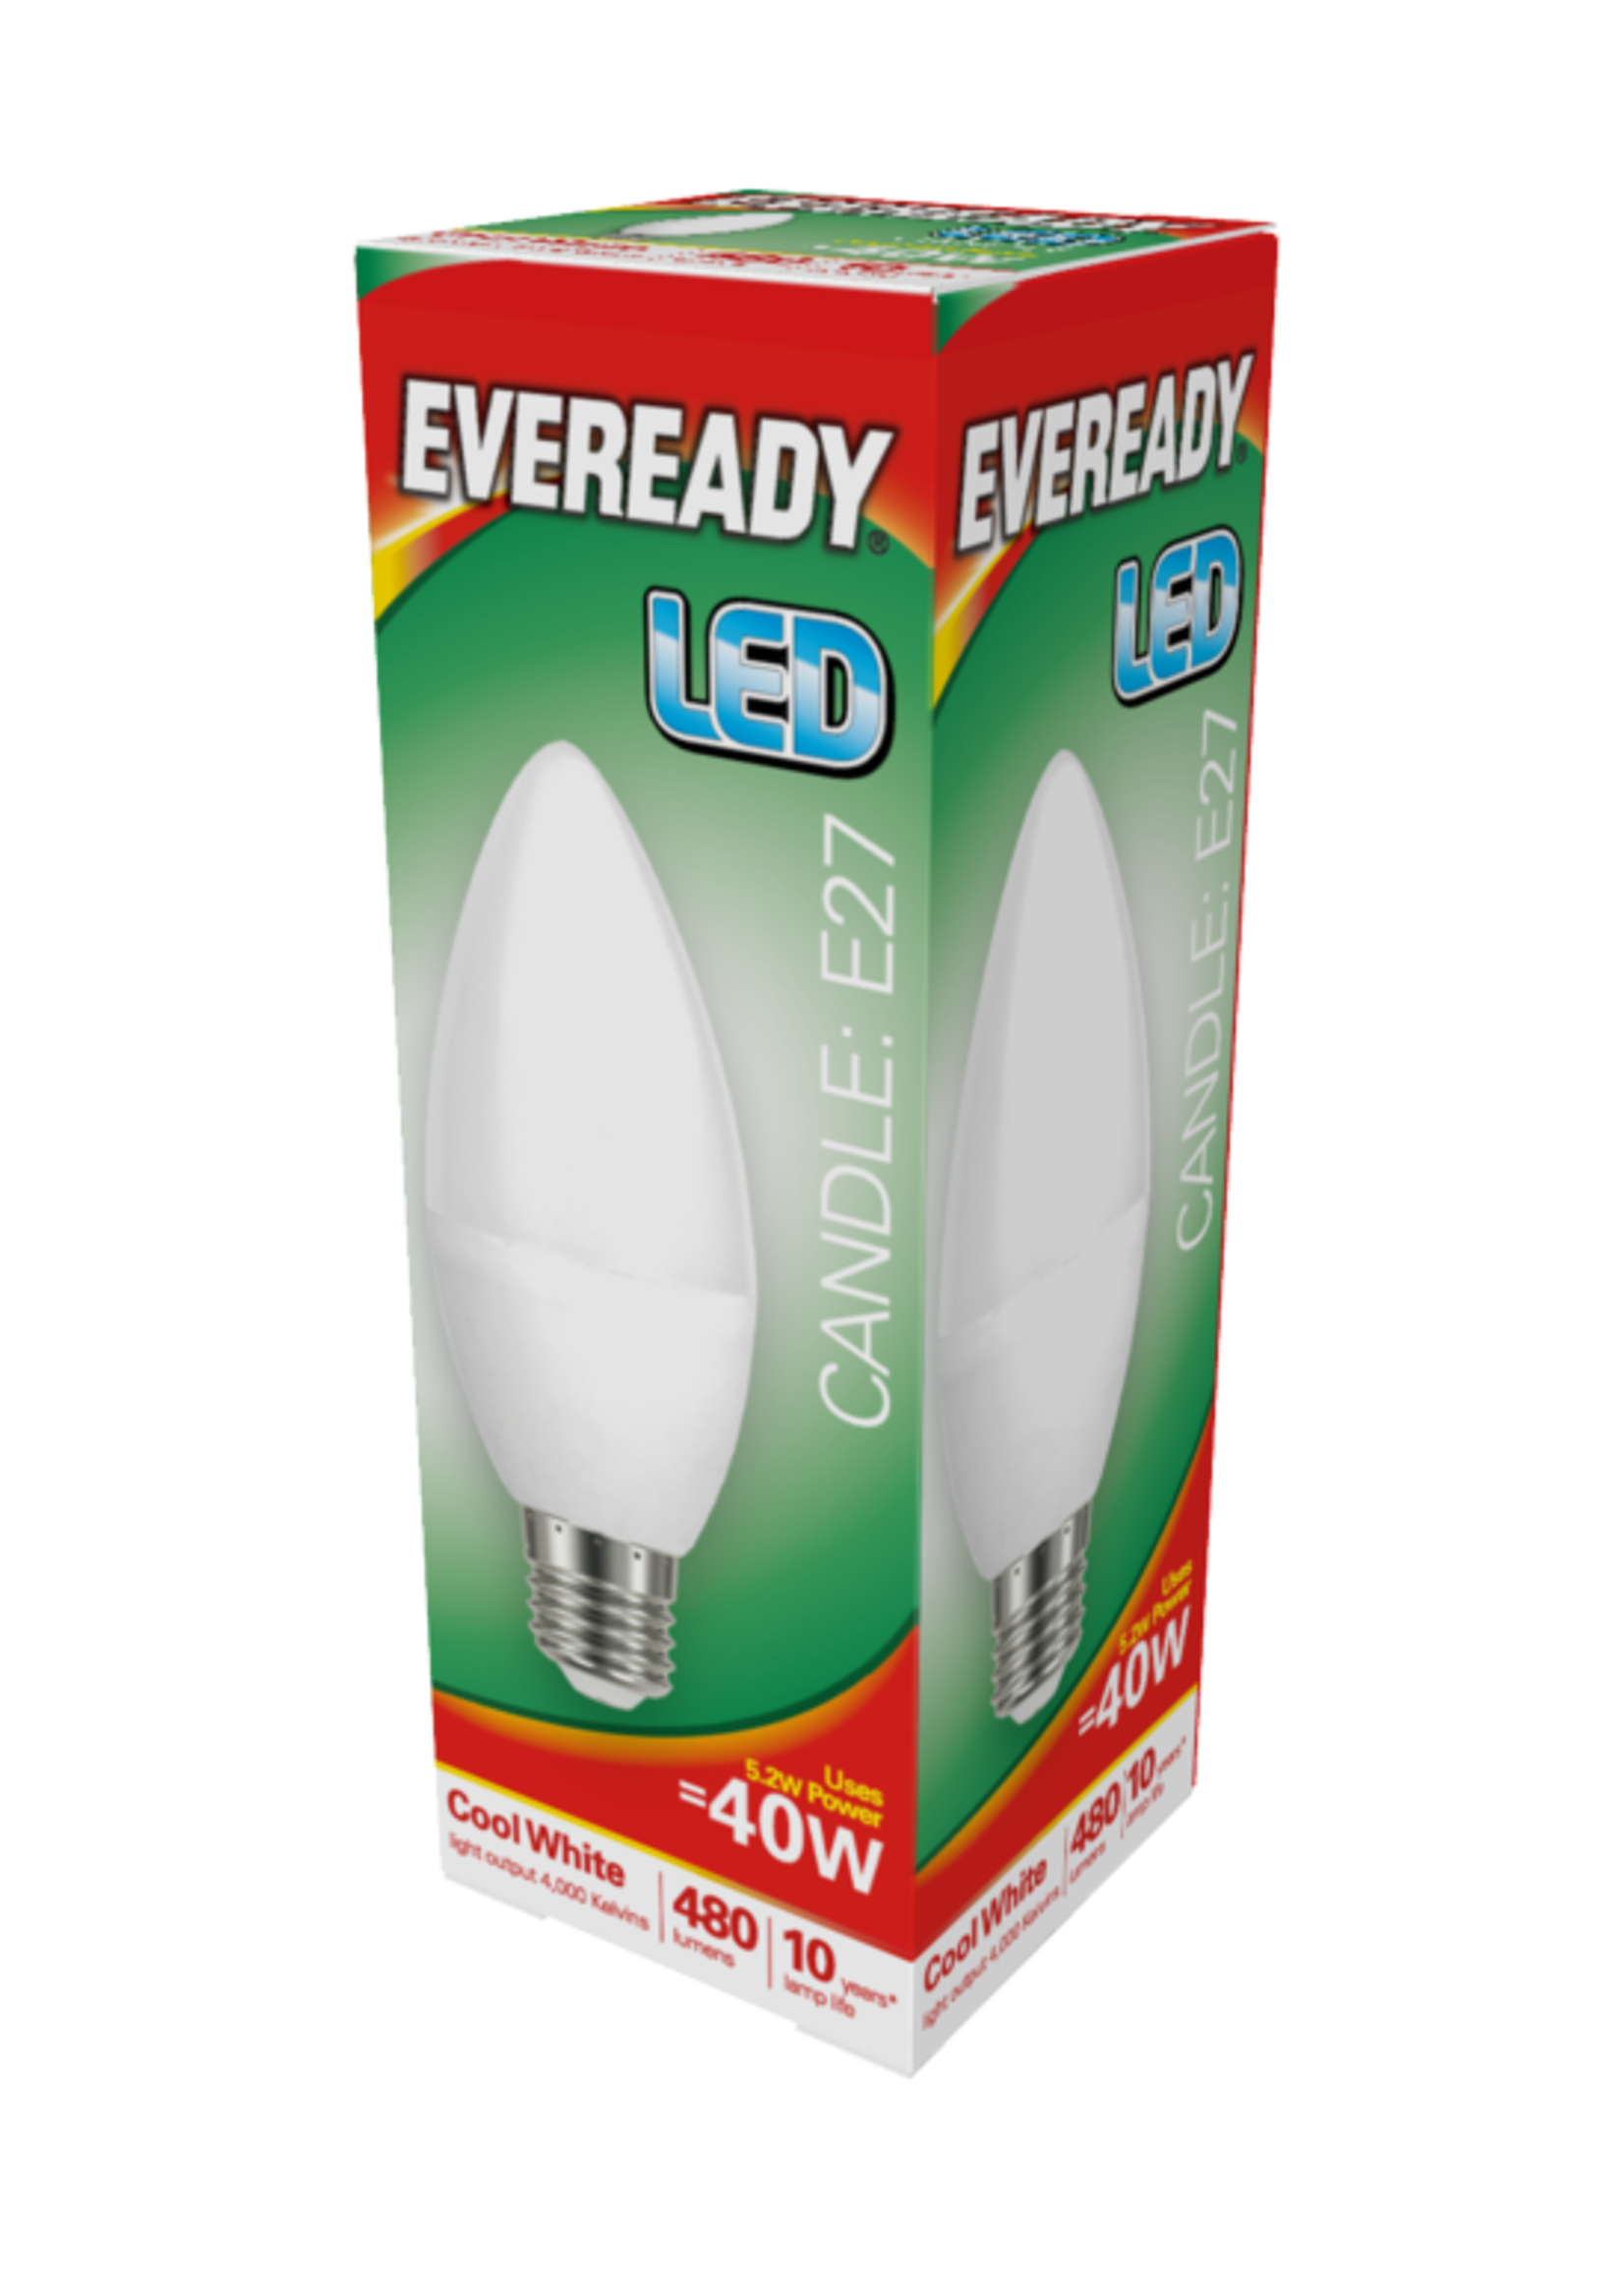 Eveready Eveready LED Candle Bulb